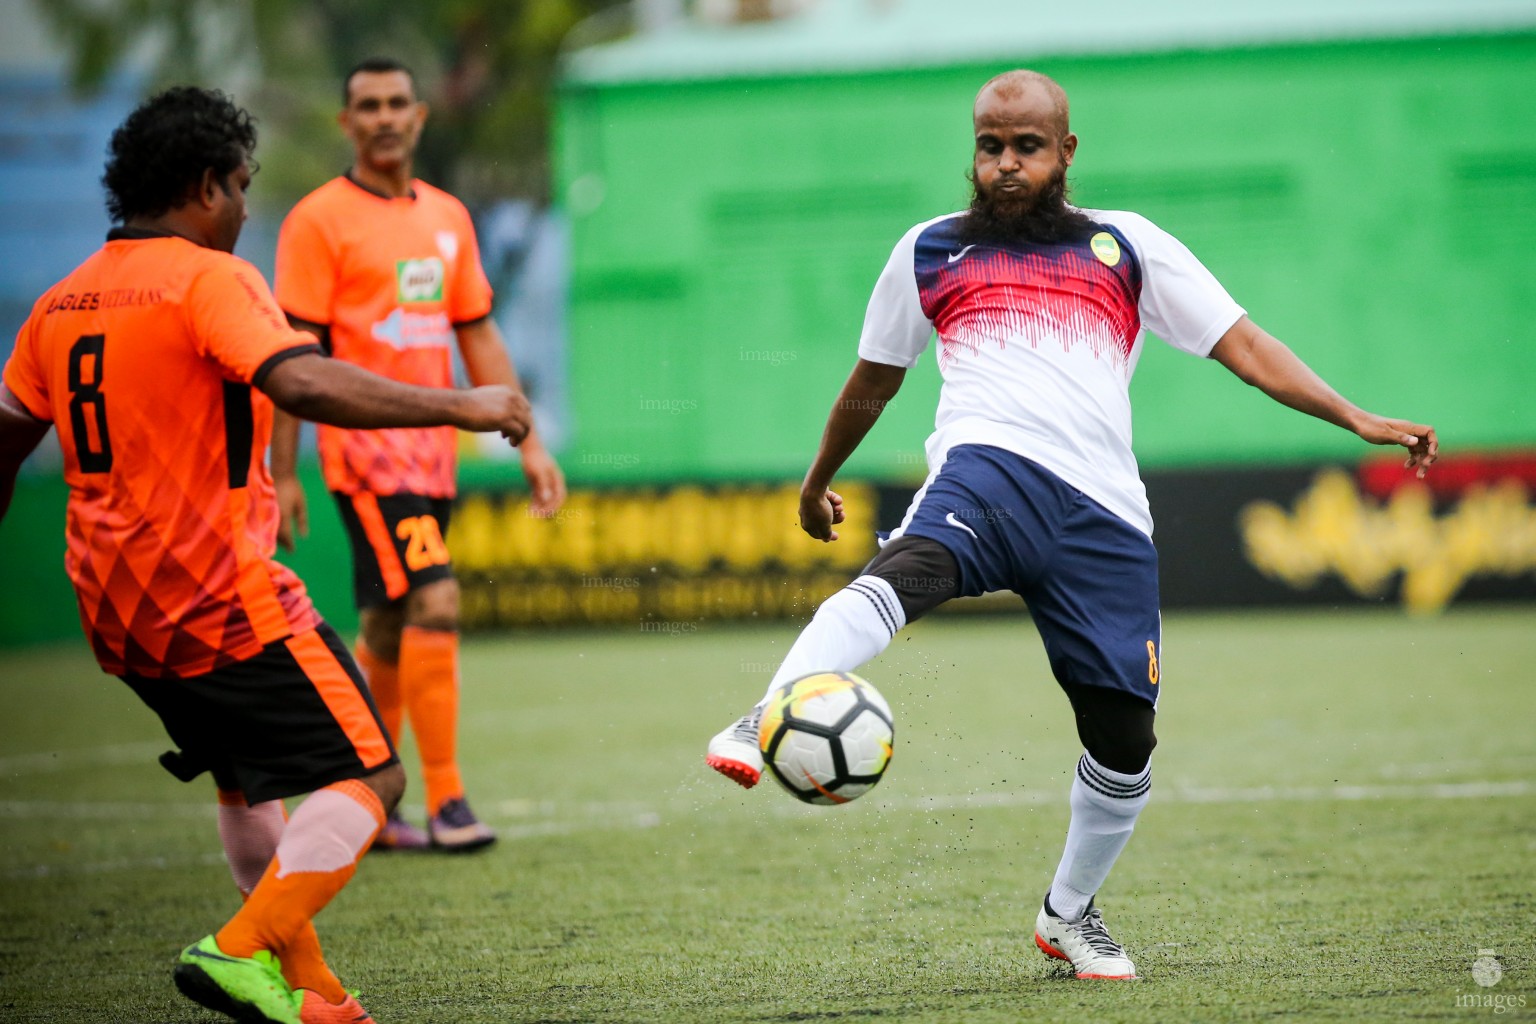 Ramazan Veterans Cup 2018 (Maziya SR vs Club Eagles)